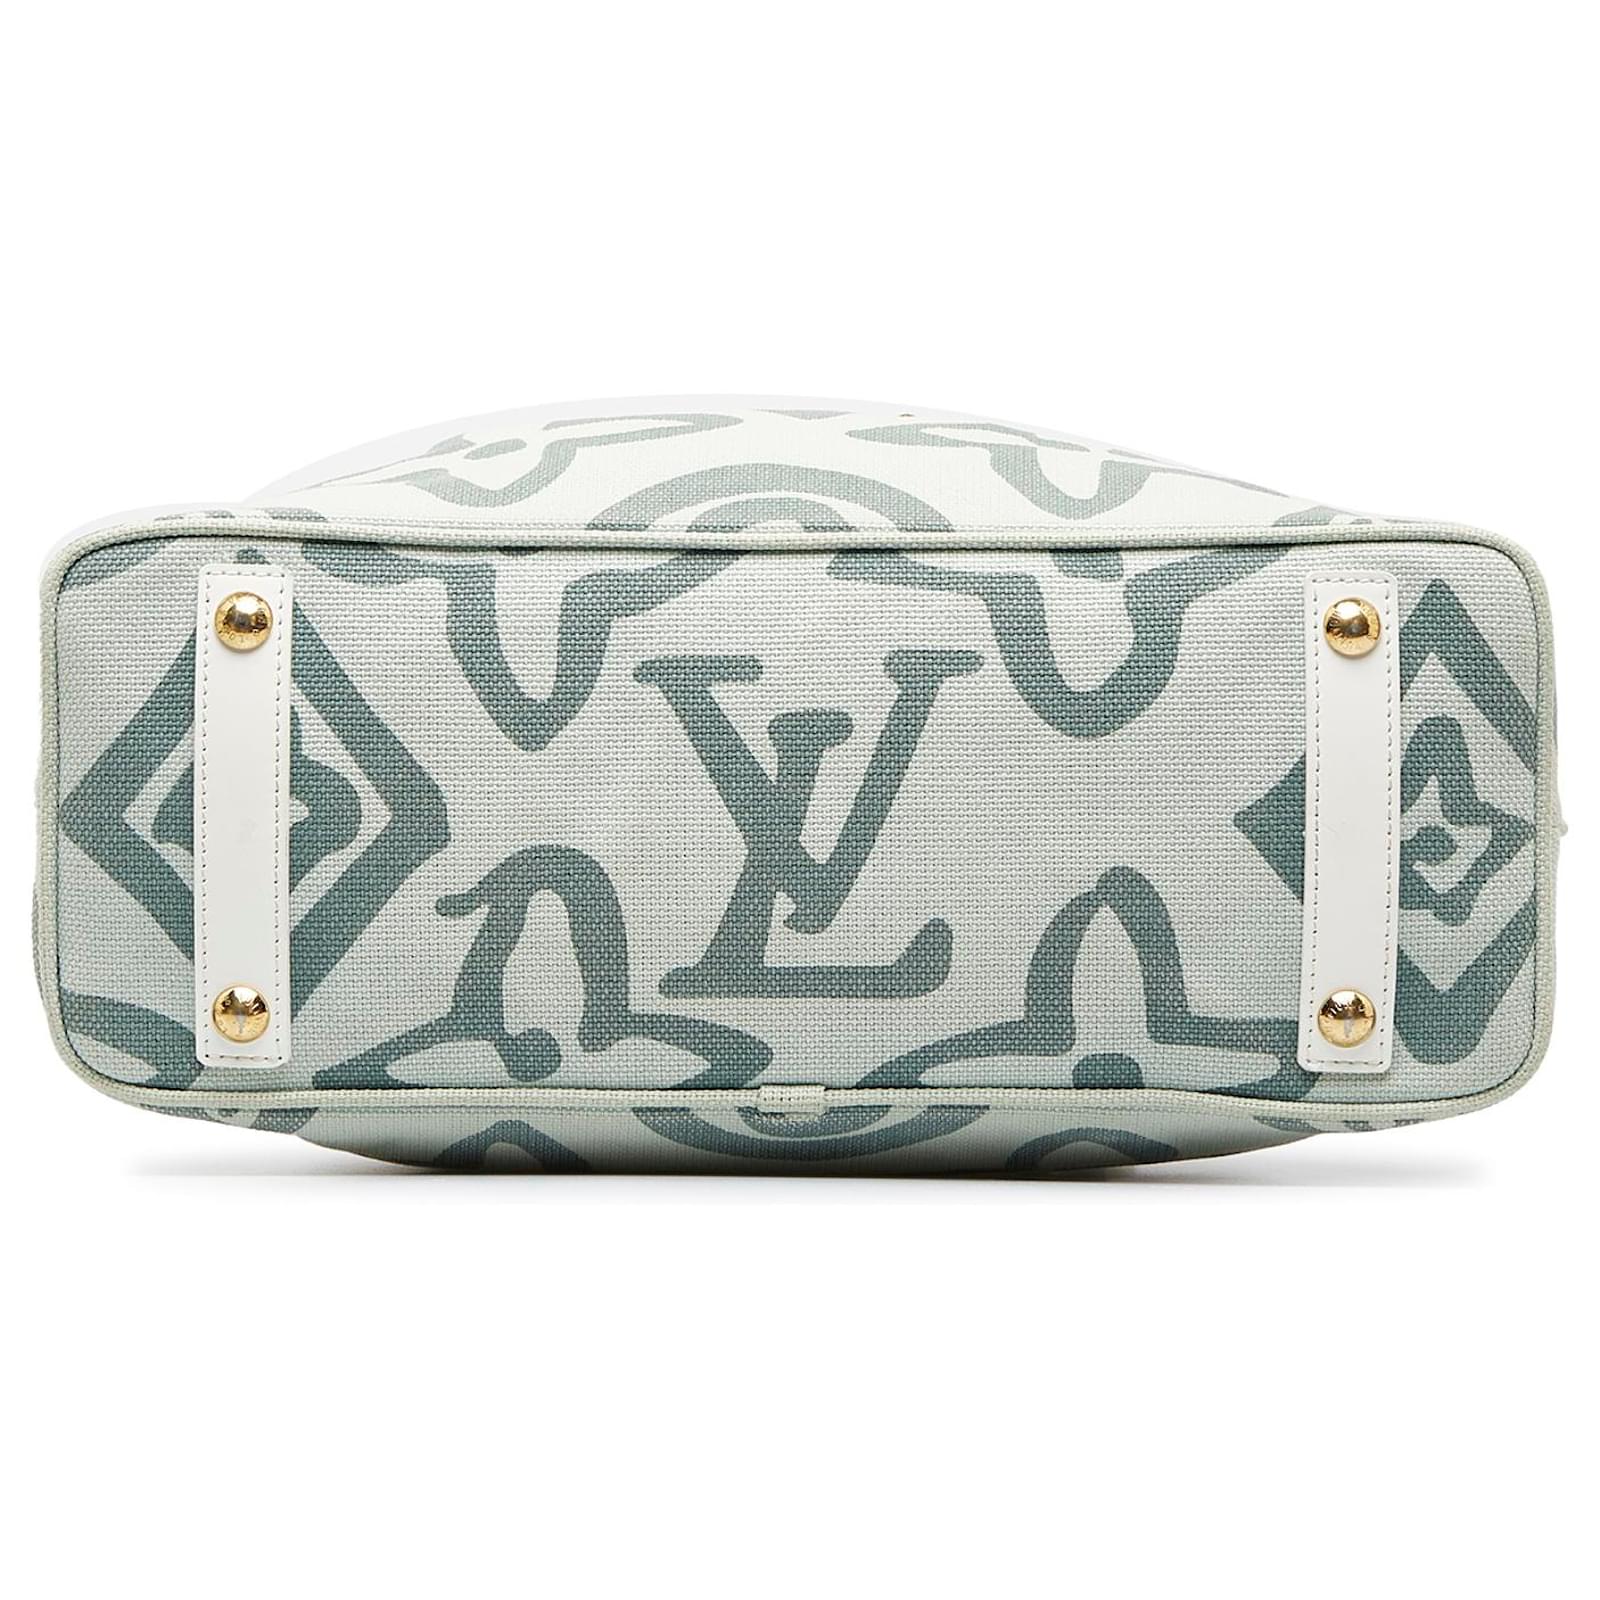 Louis Vuitton, Bags, Preloved Louis Vuitton Monogram Tahitienne Cabas Pm